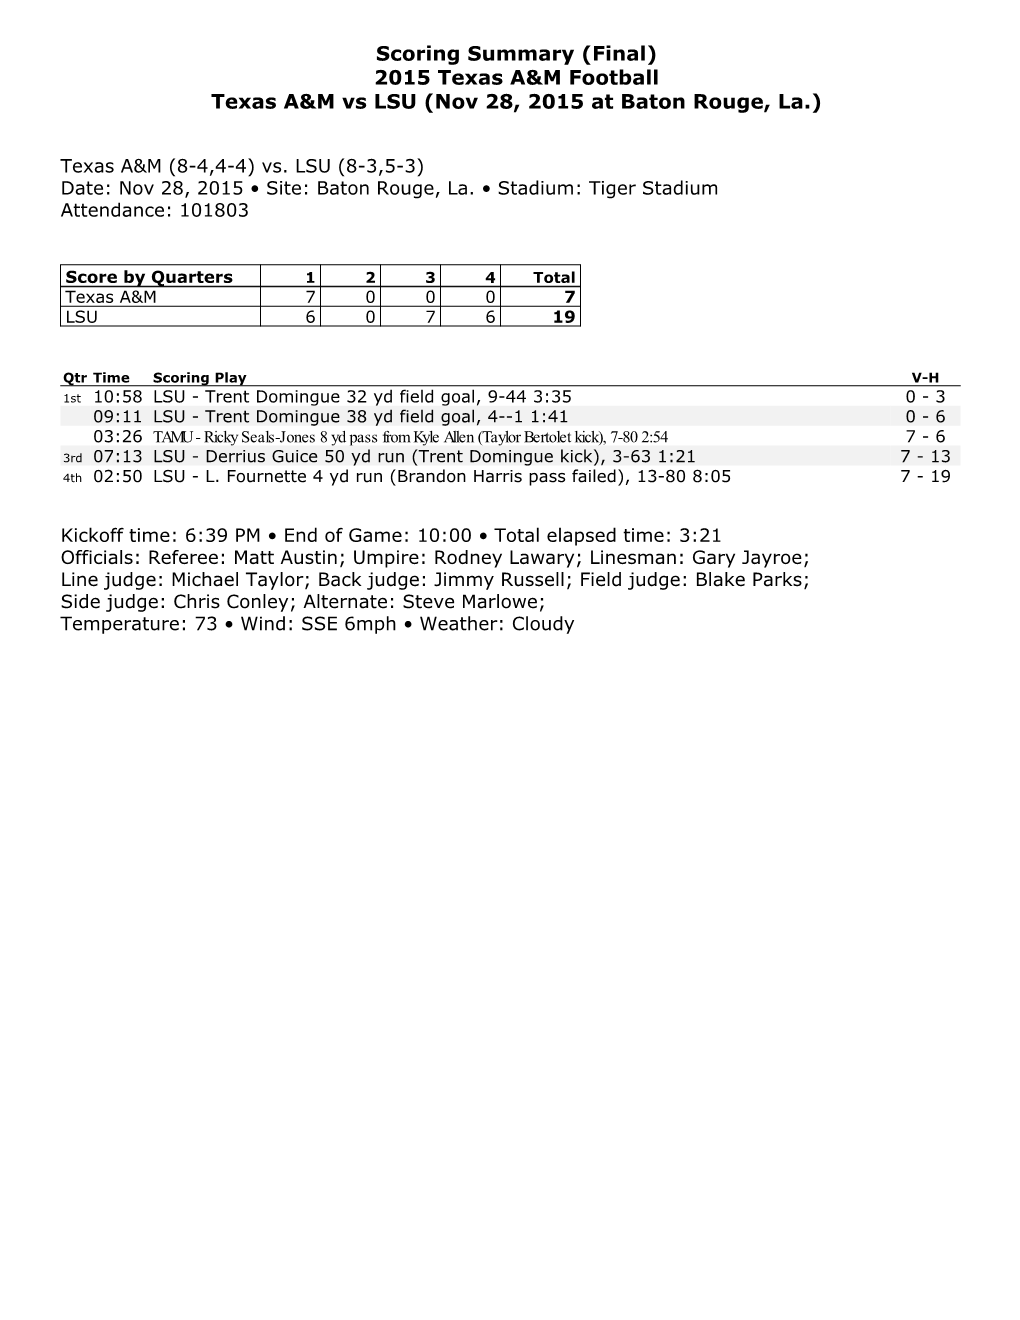 Scoring Summary (Final) 2015 Texas A&M Football Texas A&M Vs LSU (Nov 28, 2015 at Baton Rouge, La.)